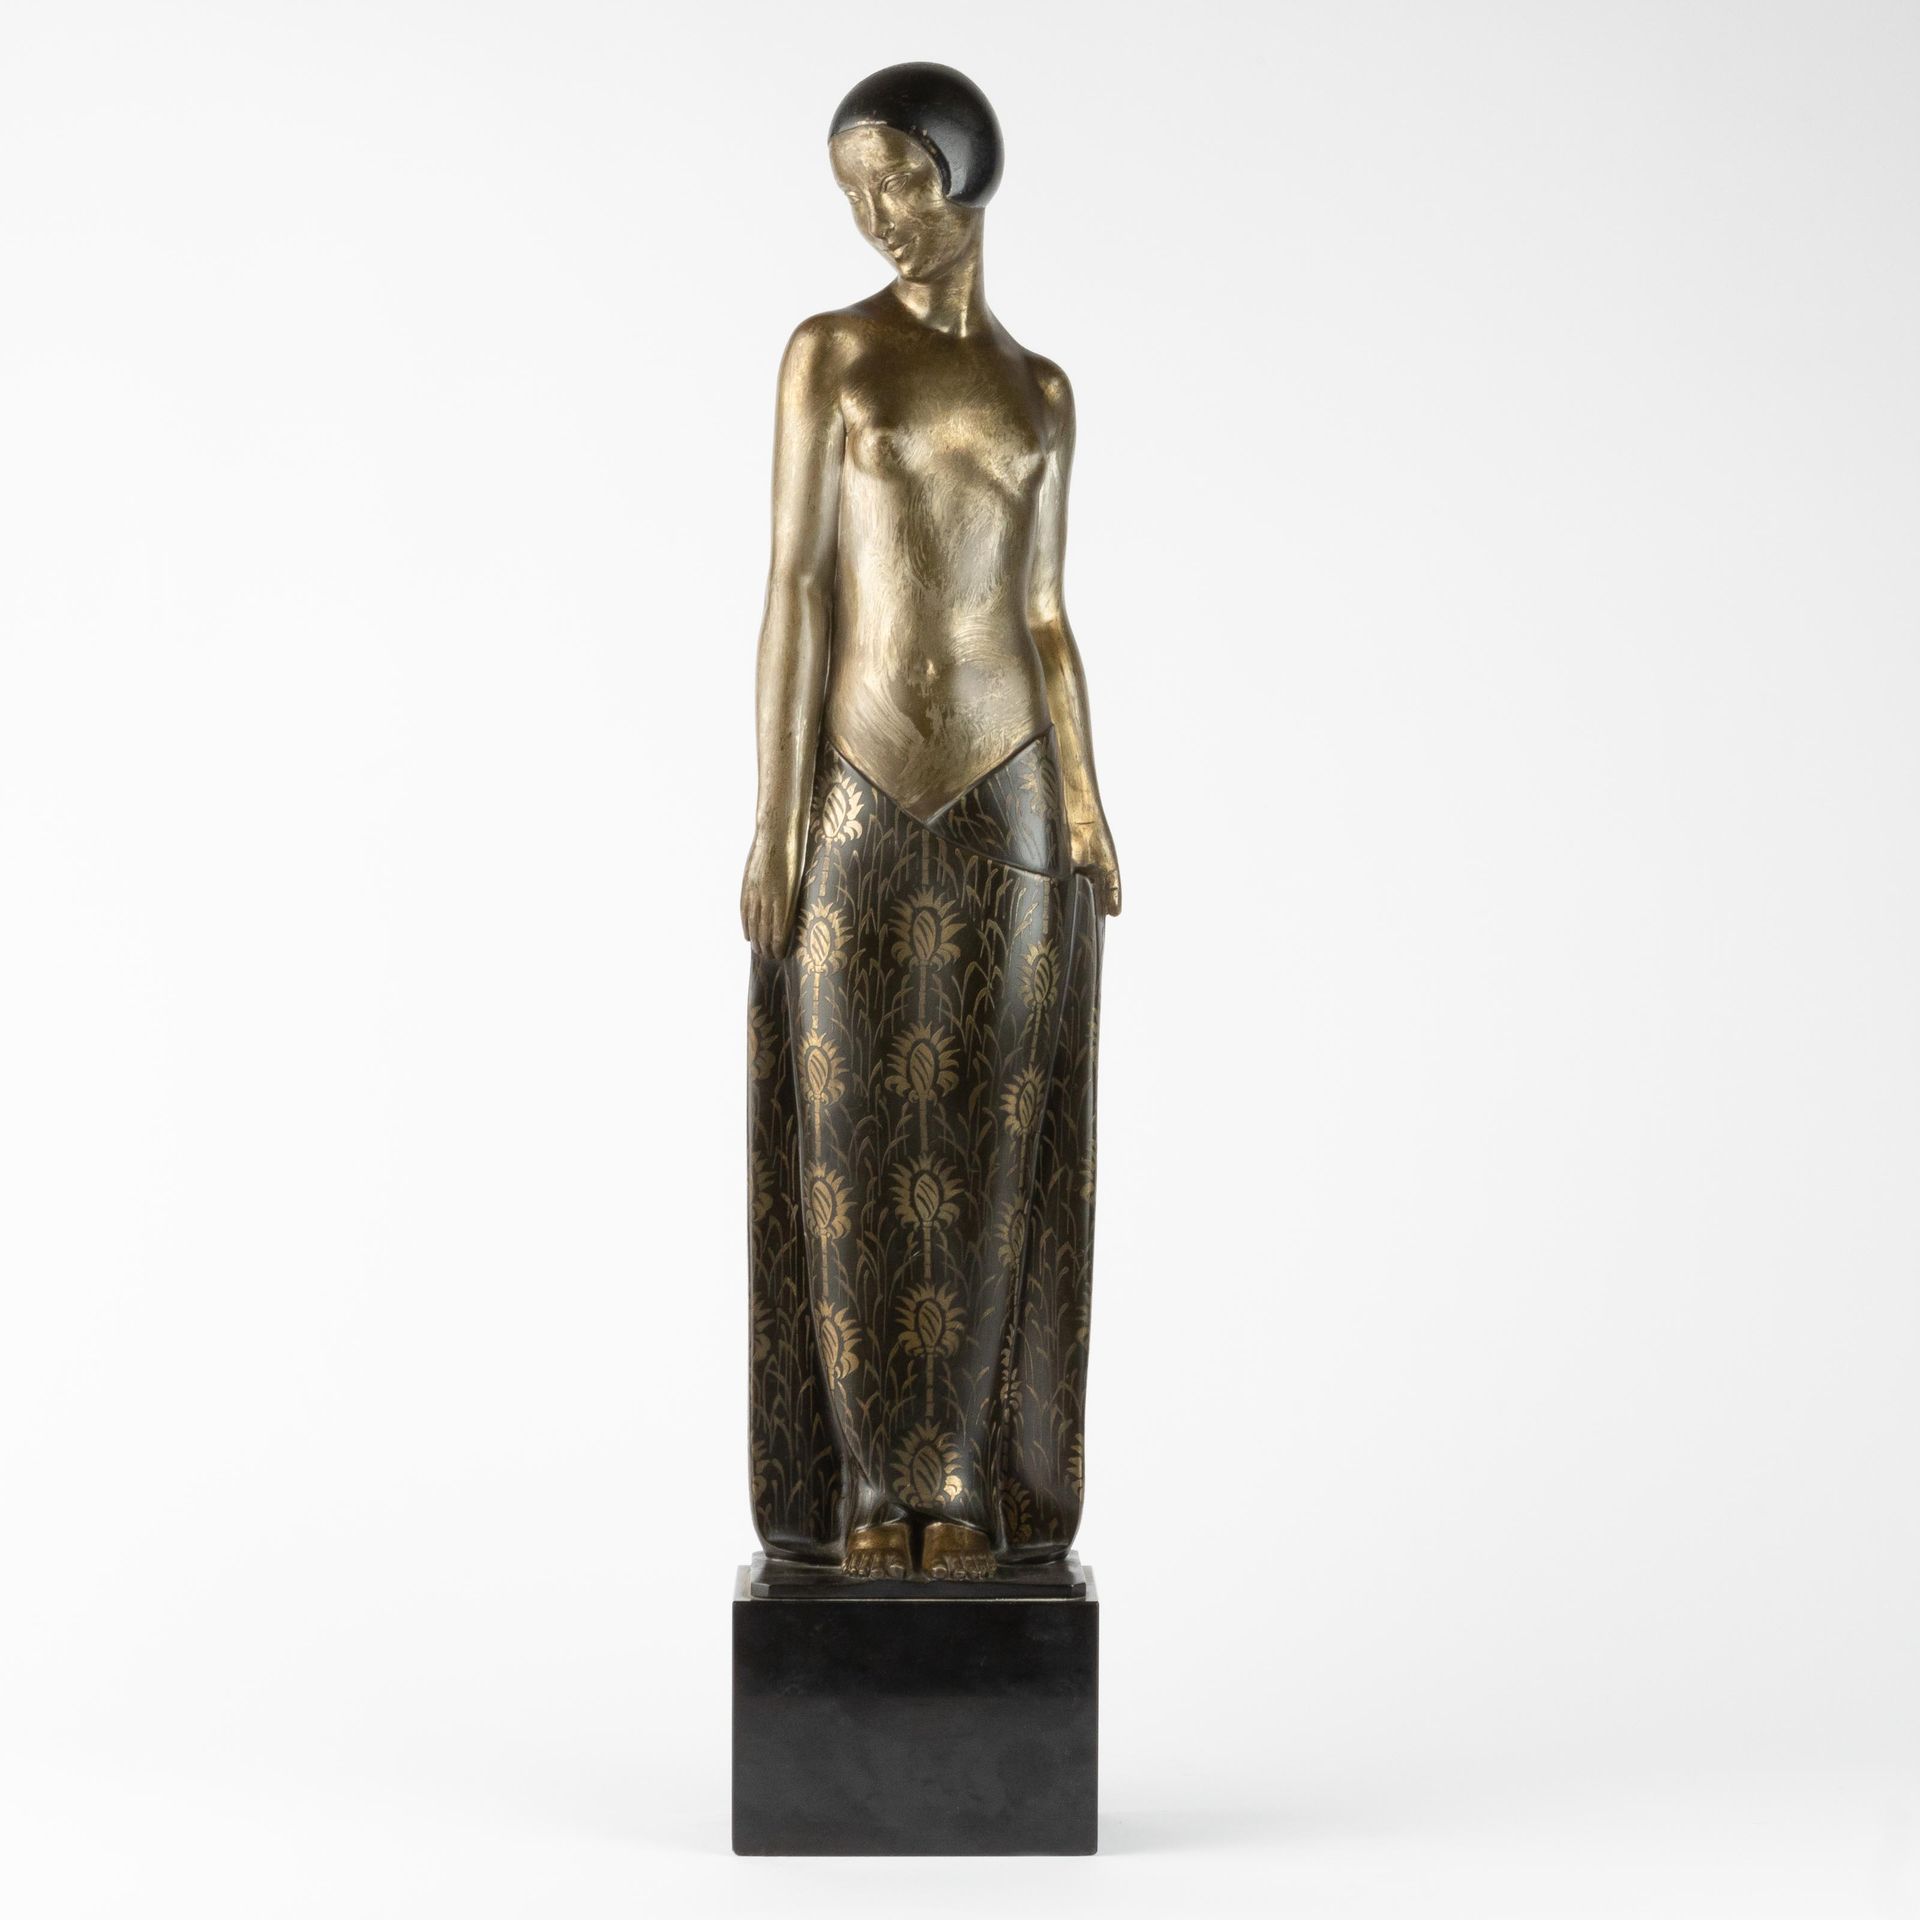 Pierre LE FAGUAYS (1892-1962) 半裸站立。装饰艺术时期。

青铜色，灰色和黑色的古铜色。

背面签有 "Le Faguays"。

&hellip;